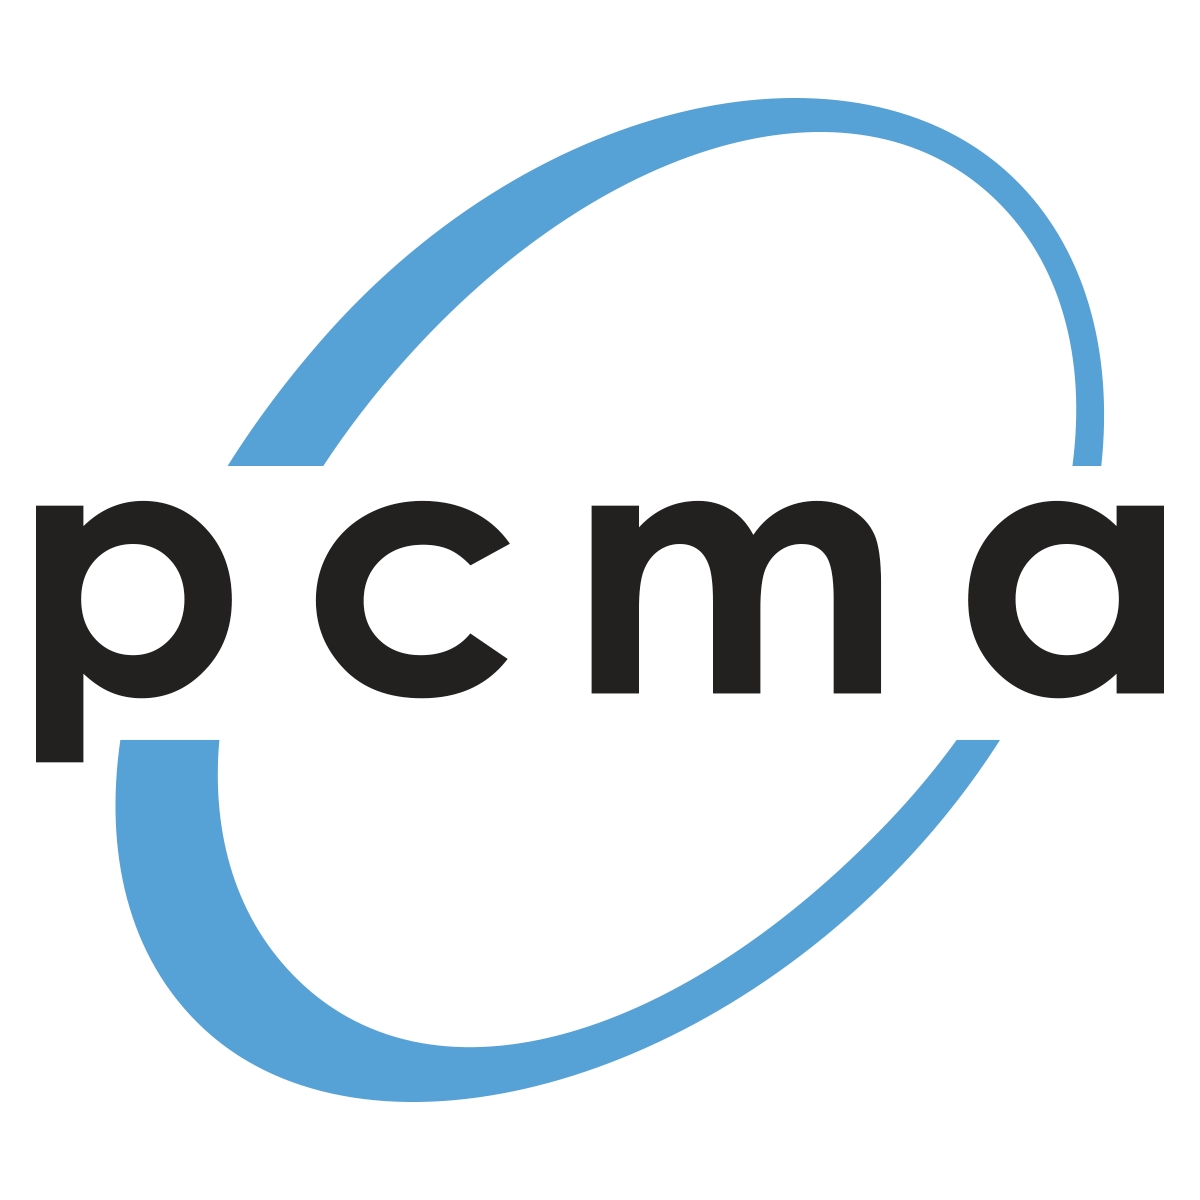 pcma-logo